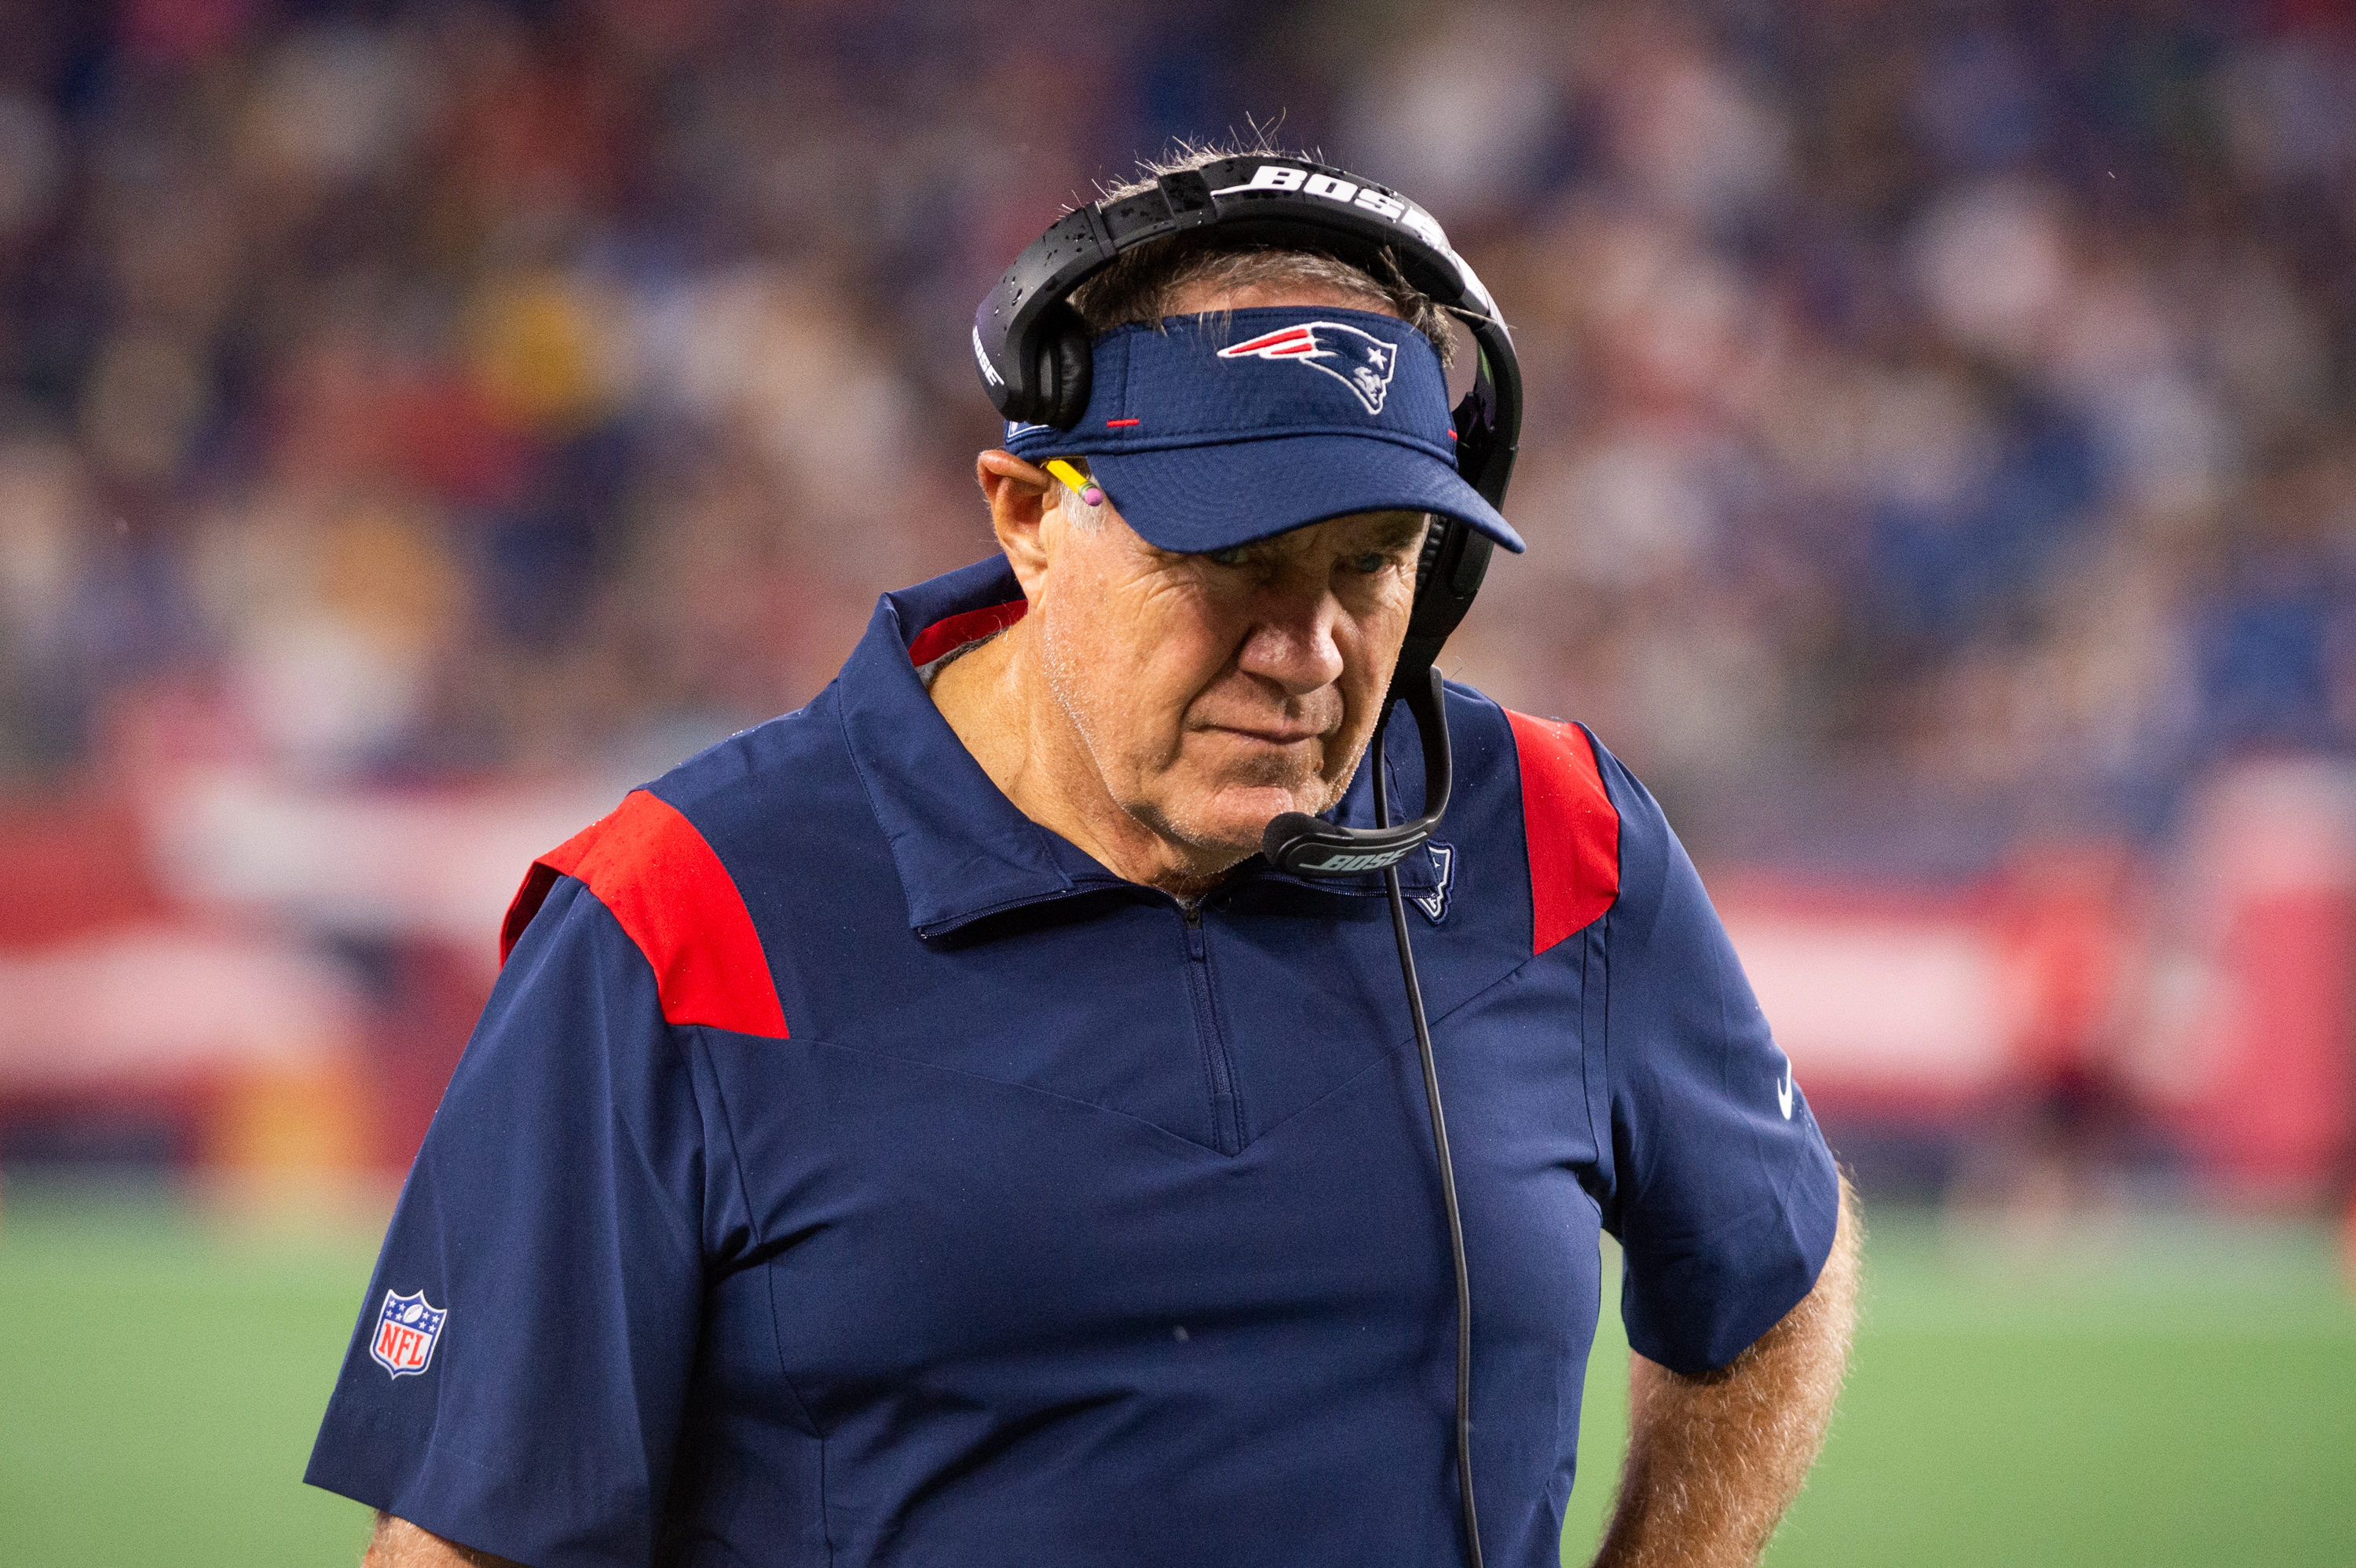 New England Patriots head coach Bill Belichick, the highest paid NFL coach